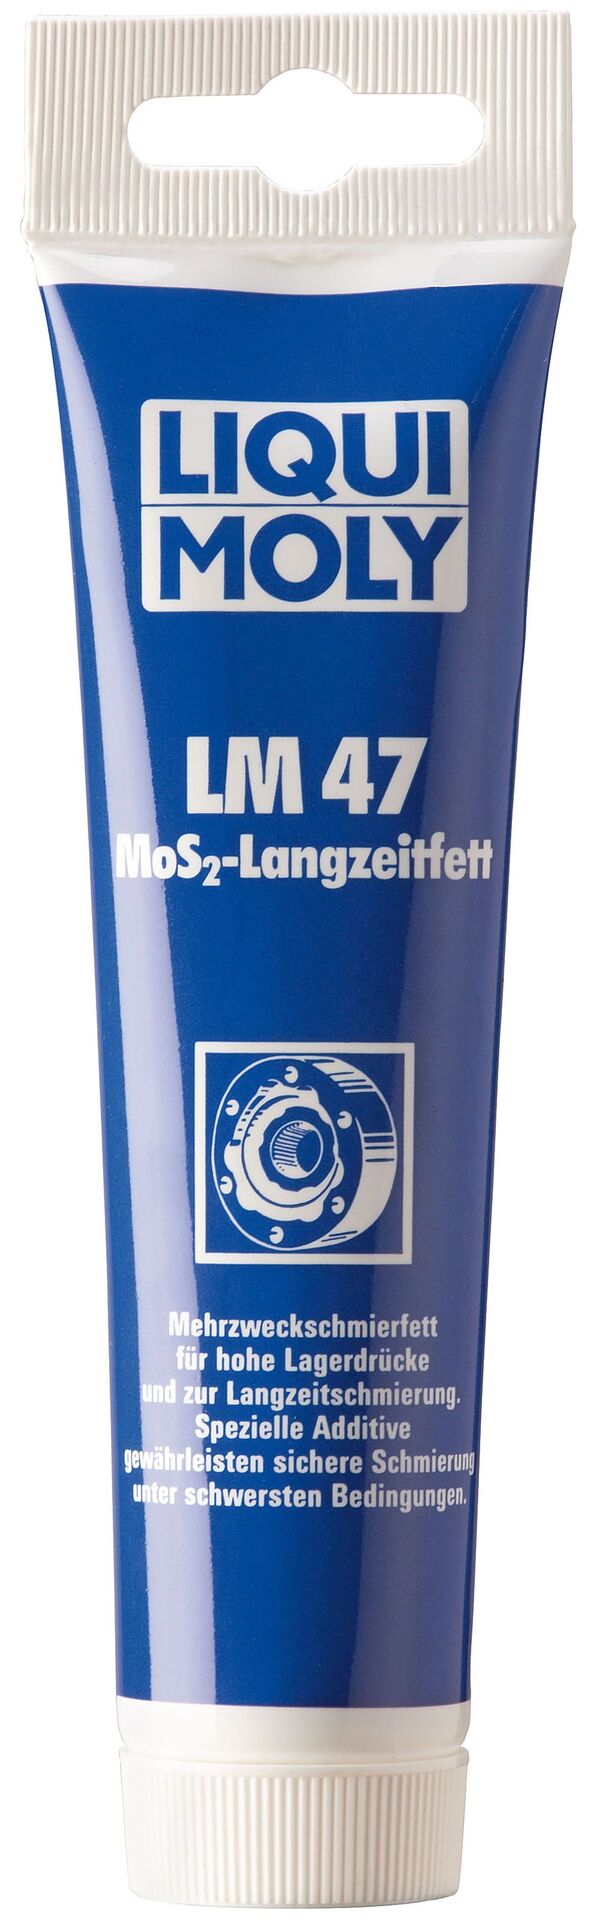 Liqui Moly Langzeitfett LM 47 und MoS2